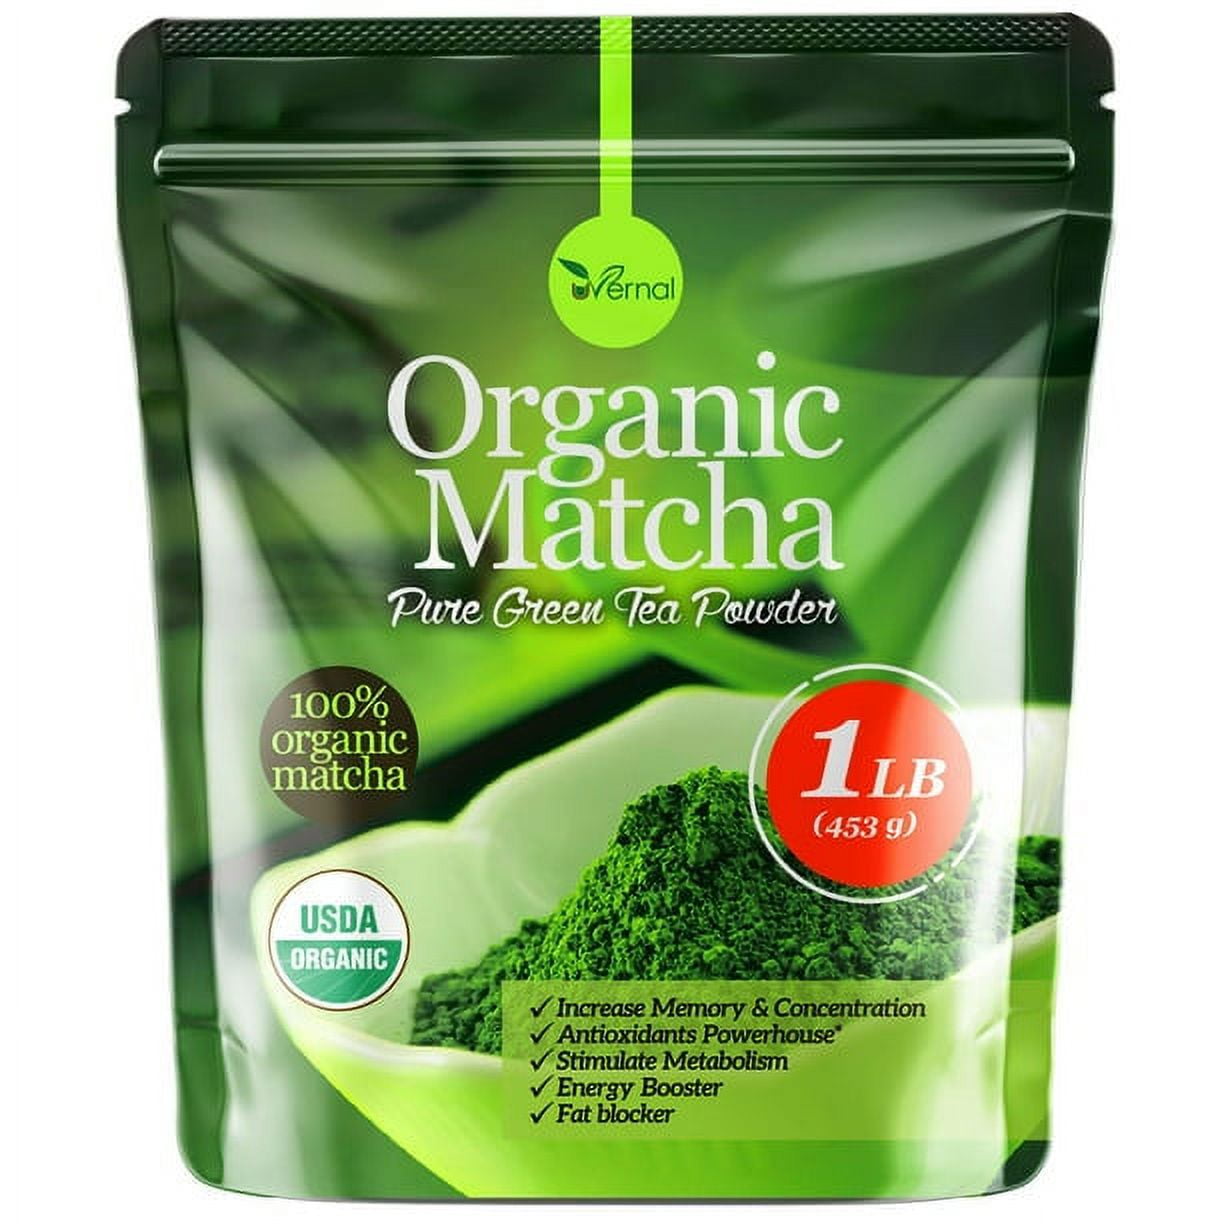 Original matcha green tea powder Boost Metabolism Keto Matcha For Bake 250g